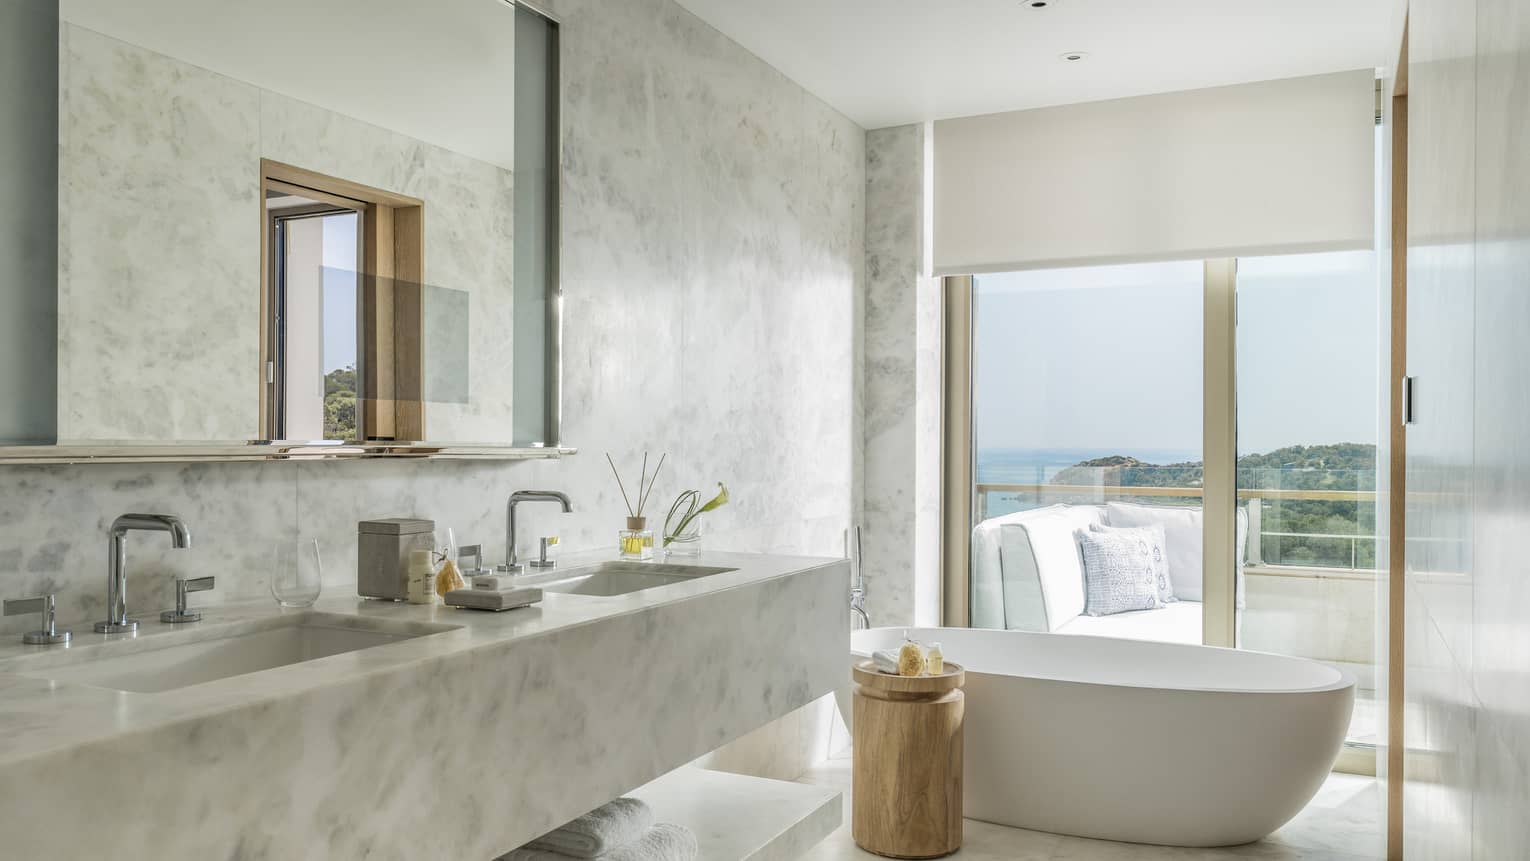 Arion Pine View Bathroom with marbled double vanity, full-width mirror, large soaking tub, ocean views